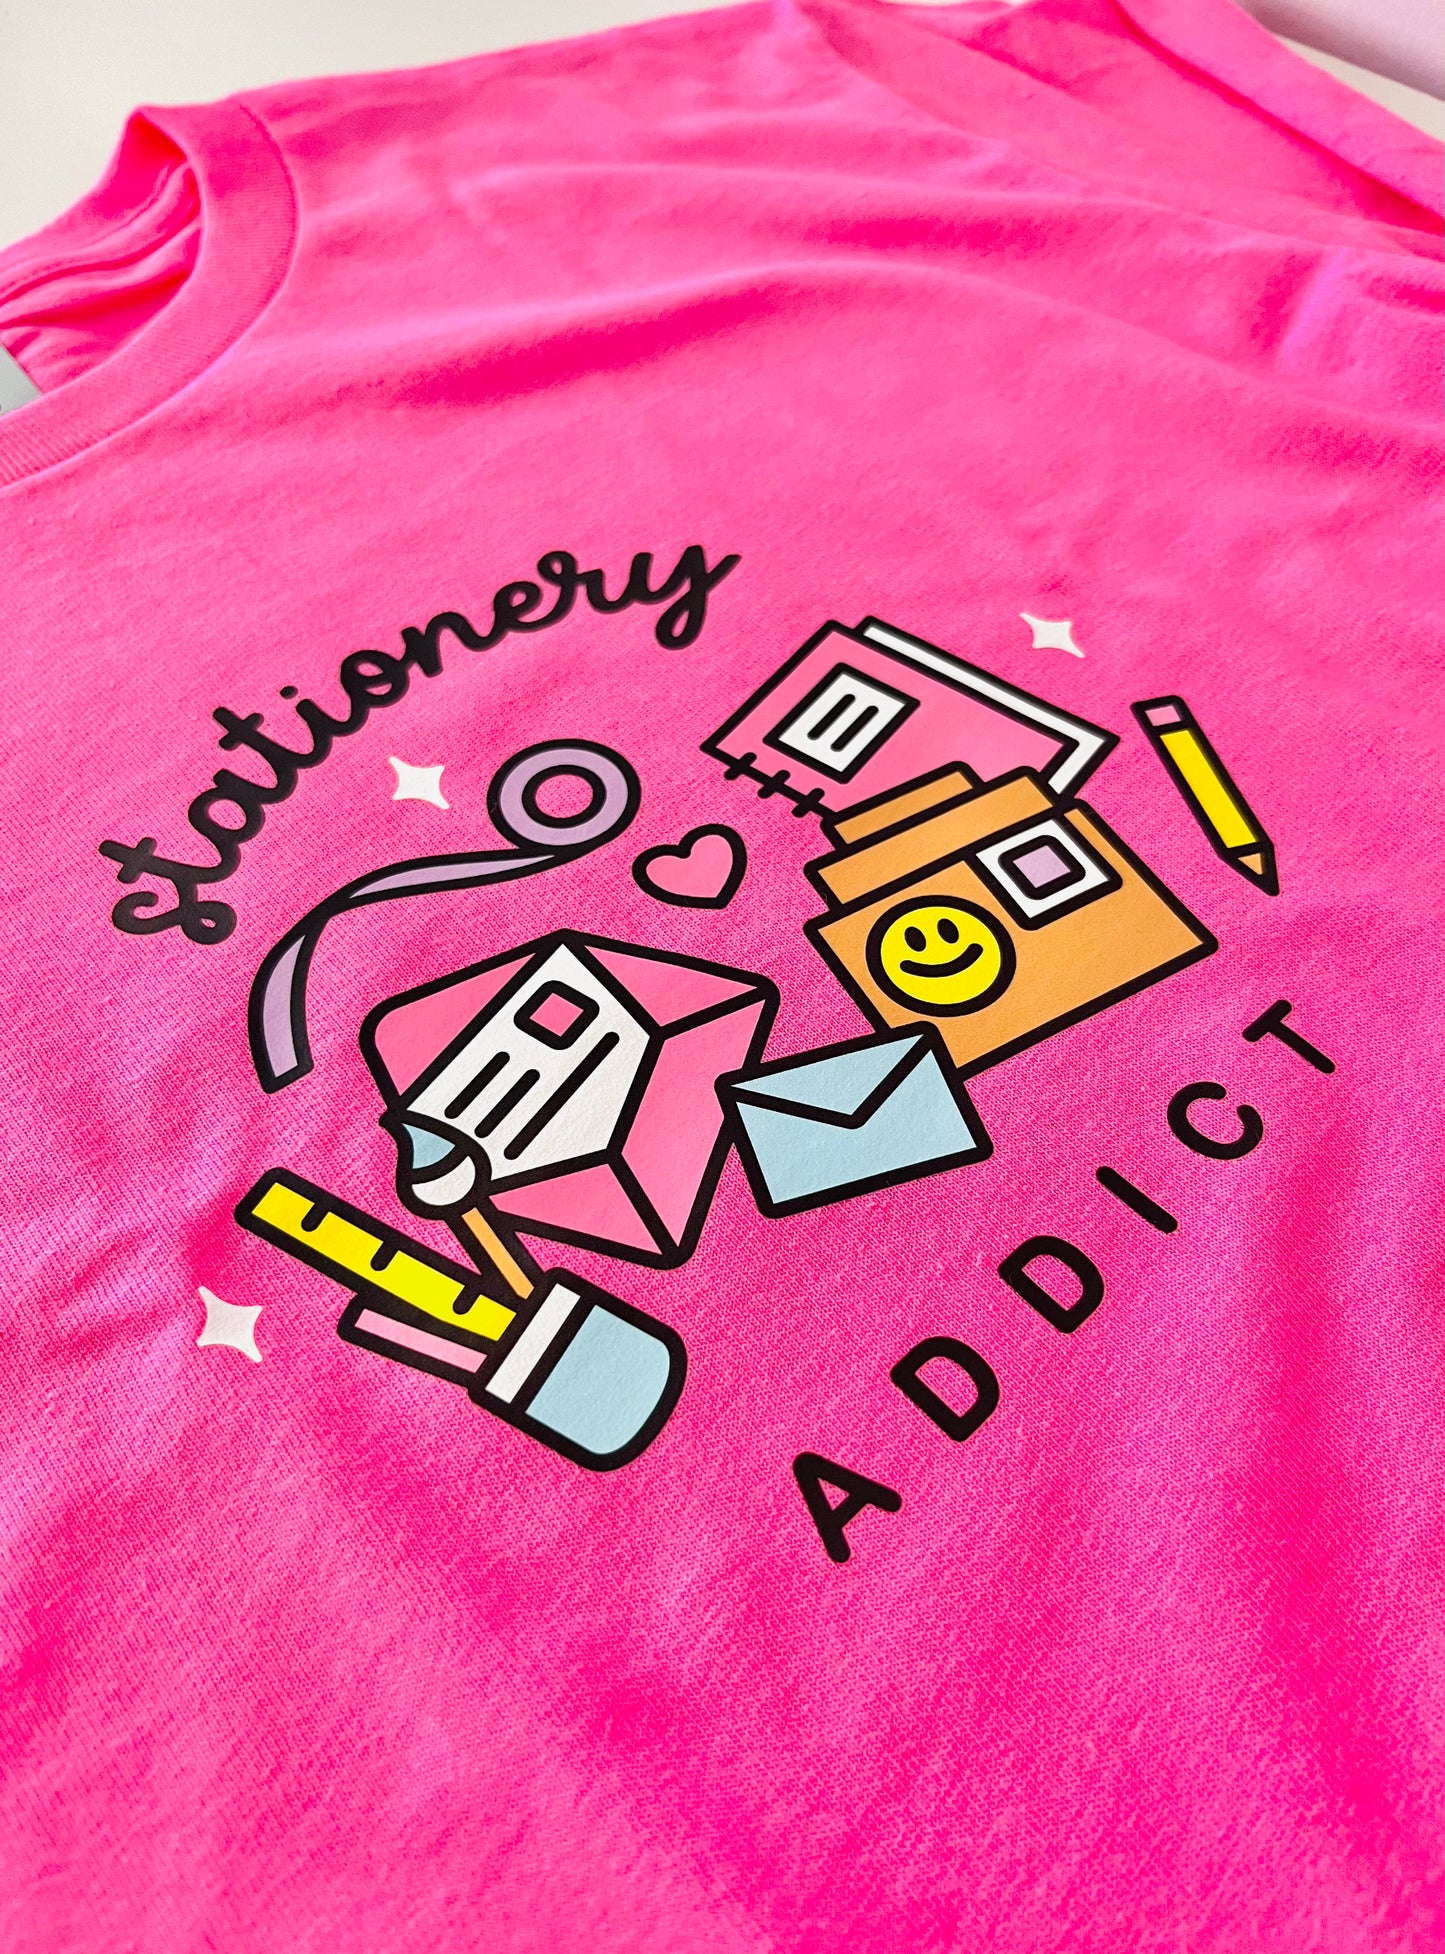 Hot Pink Stationery Addict T-Shirt